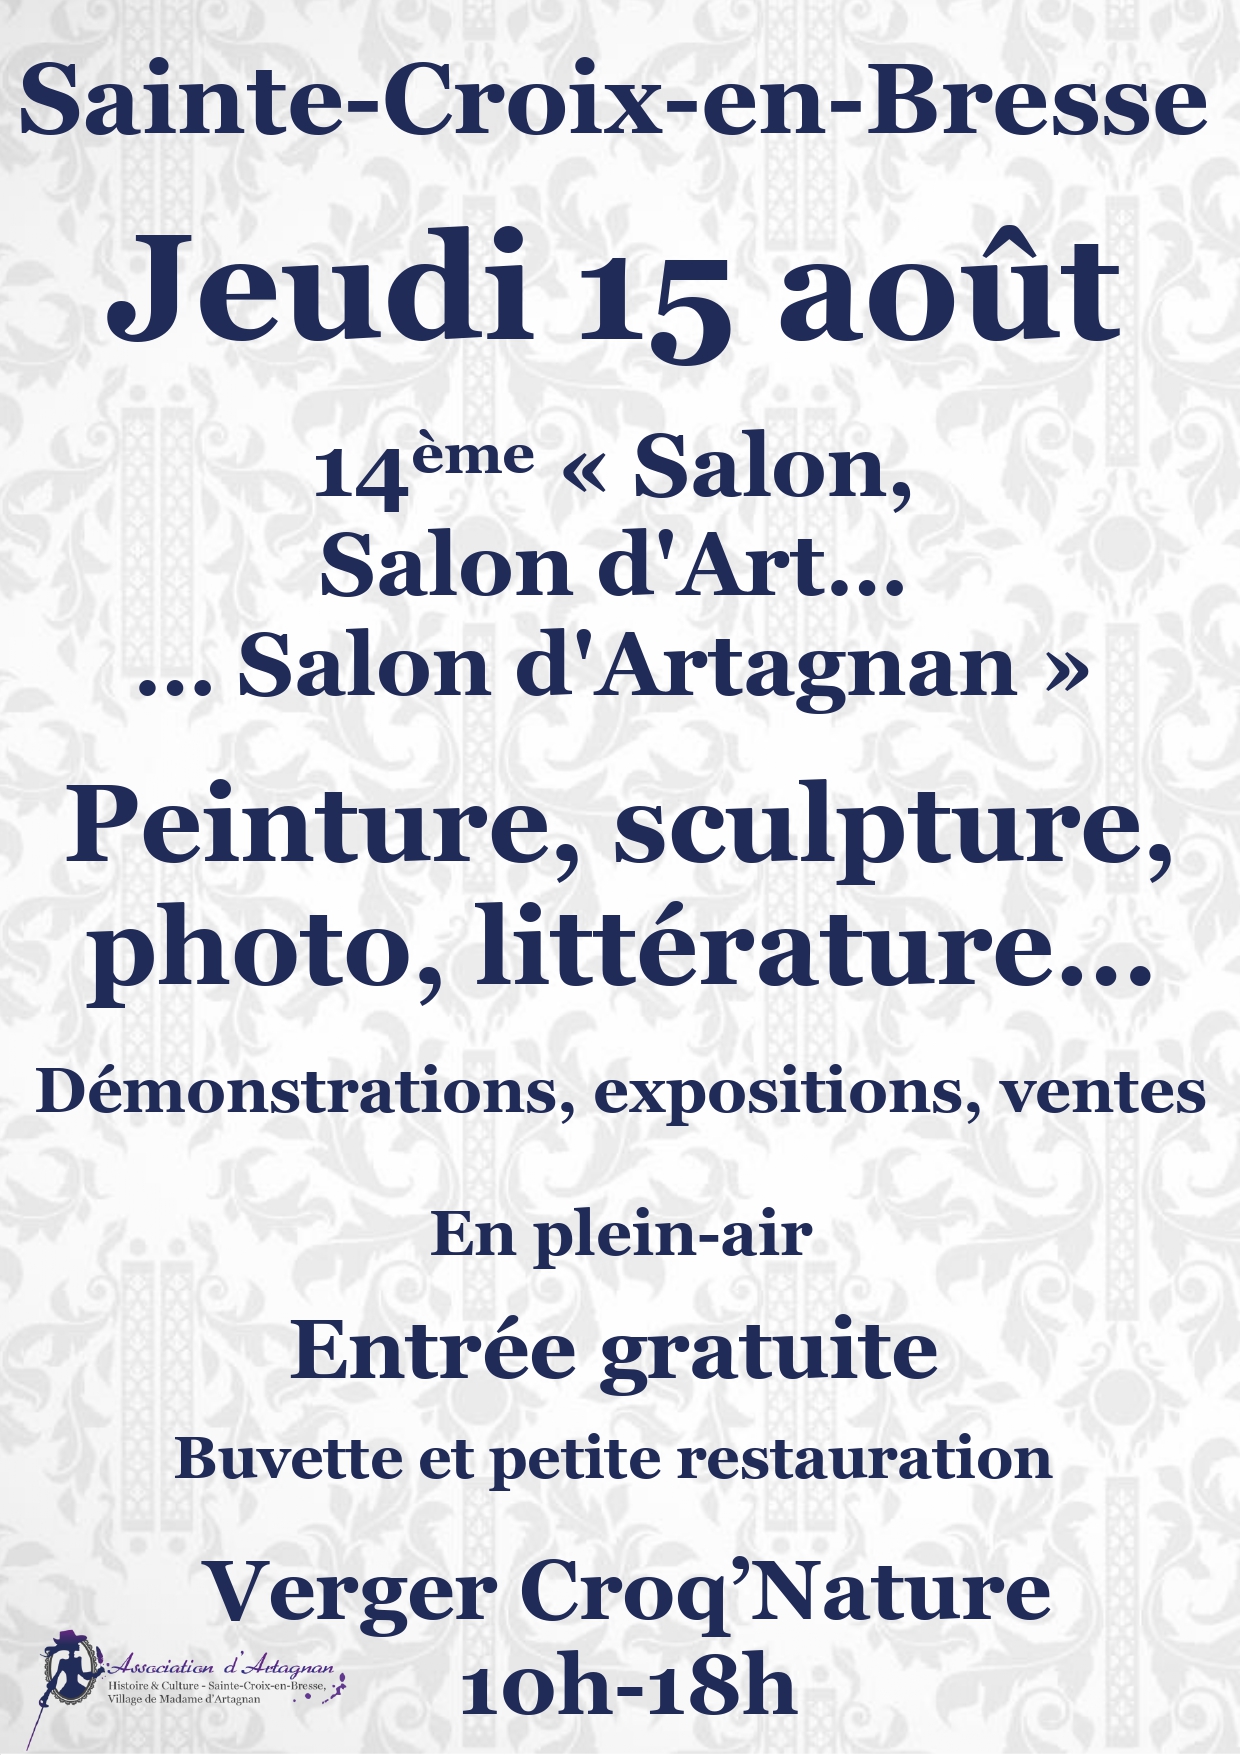 14ème Salon, Salon d'art, Salon d'Artagnan